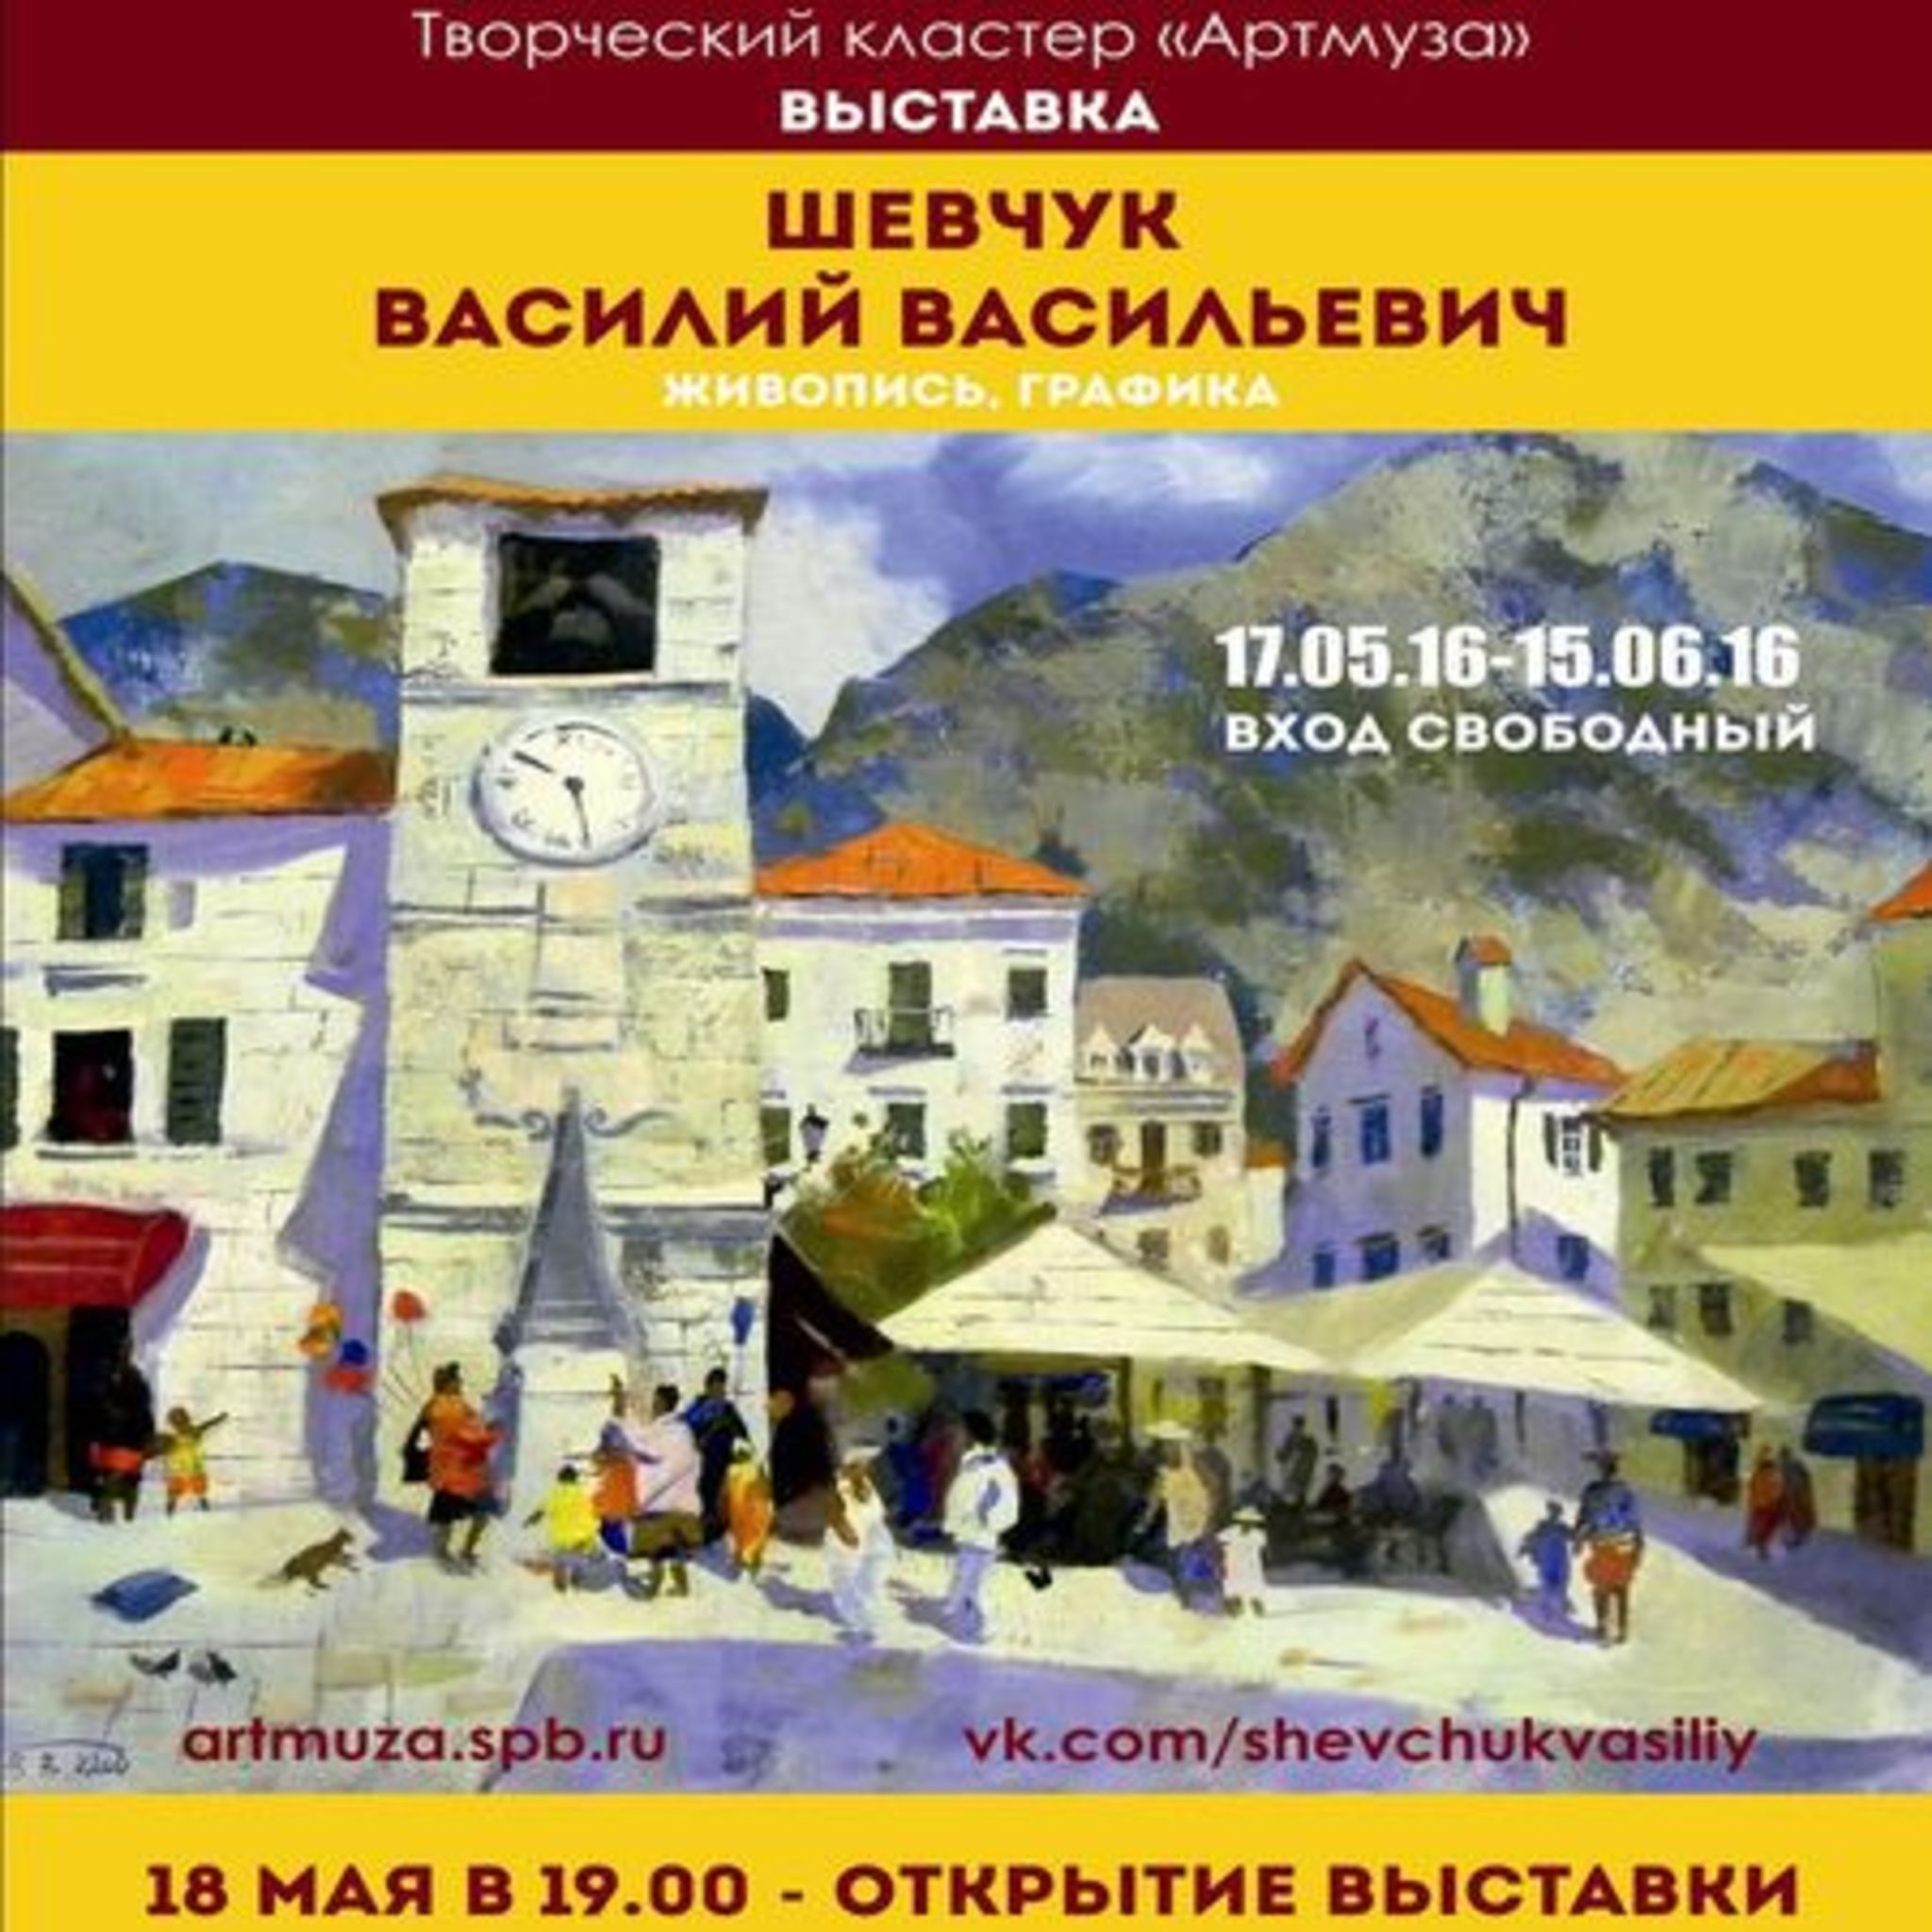 The exhibition Vasily Shevchuk Painting and Graphics